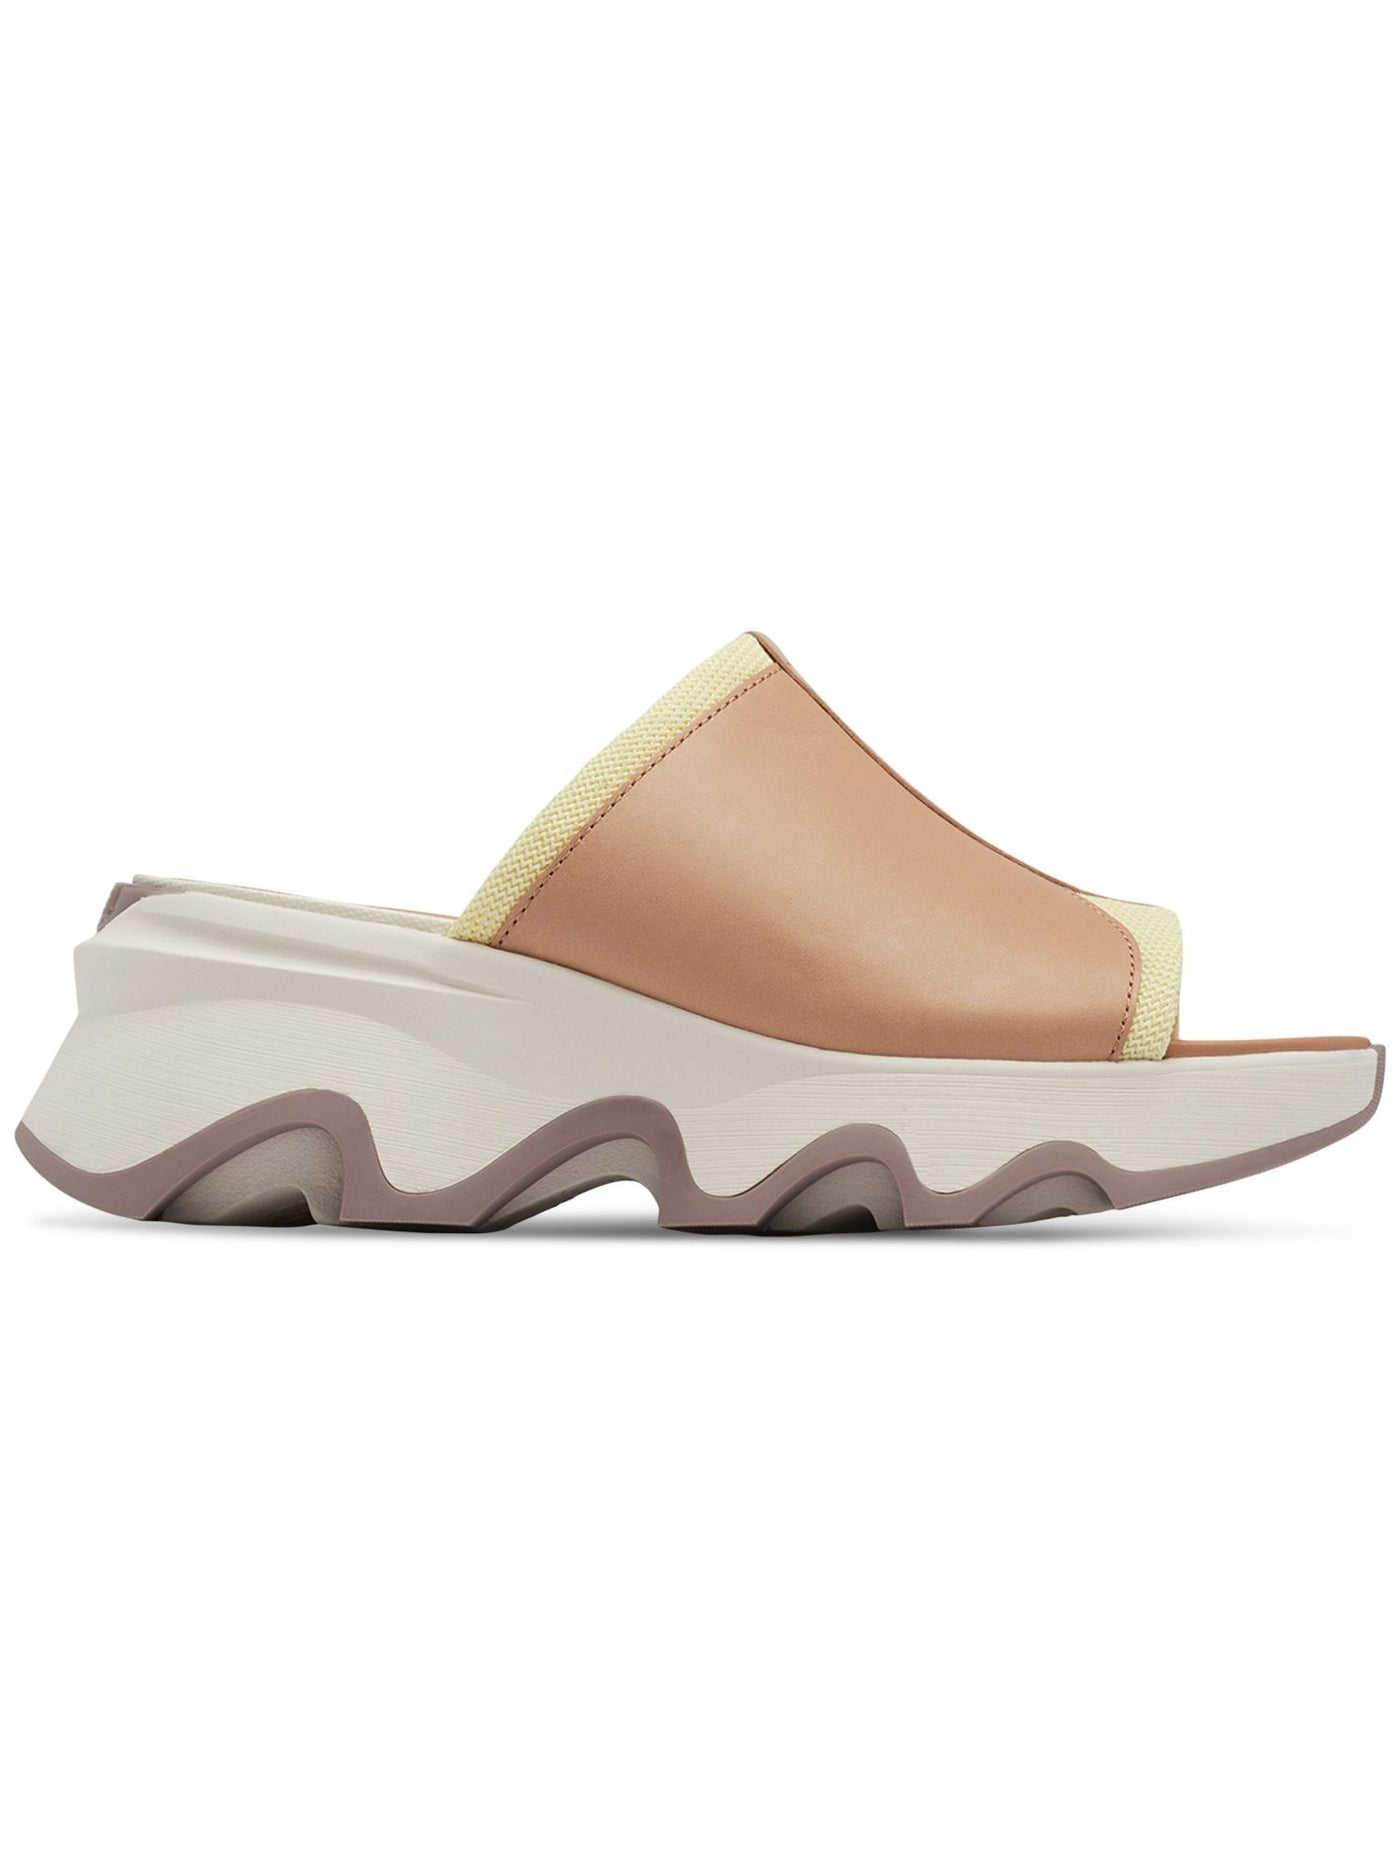 SOREL Womens Beige Mixed Media Padded Scalloped Kinetic Square Toe Wedge Slip On Slide Sandals Shoes 10